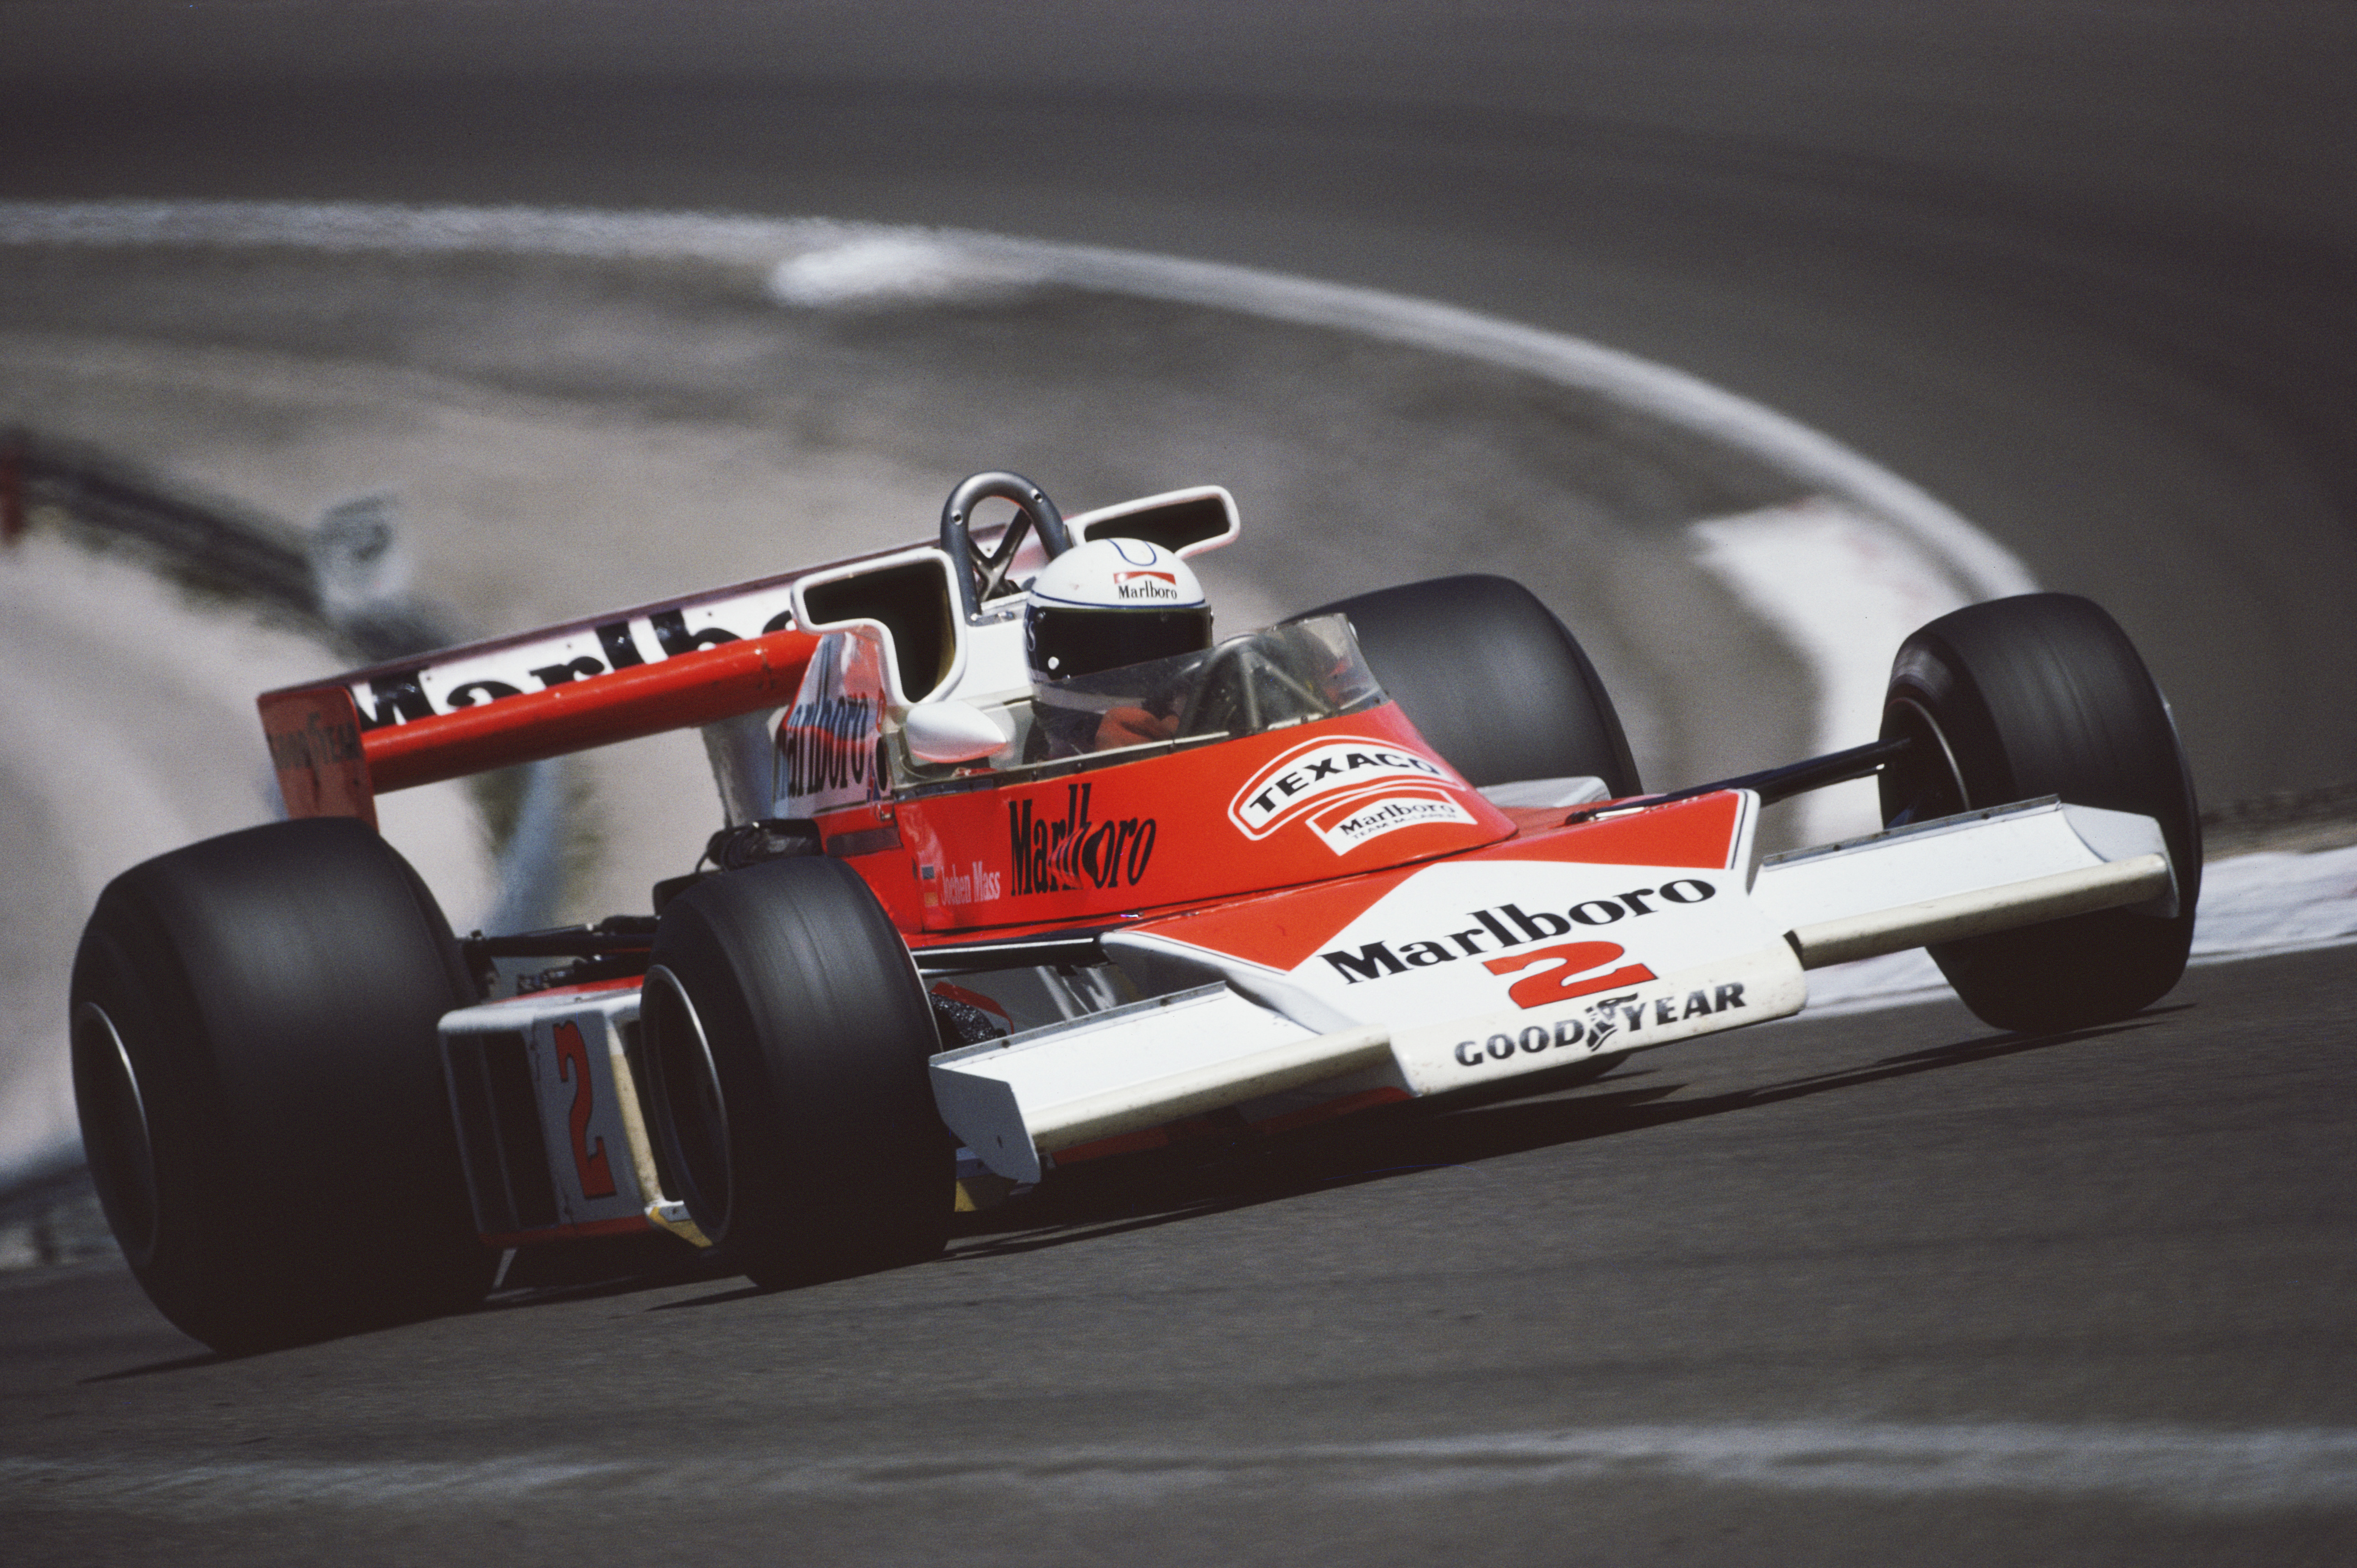 Jochen Mass at Speed in the M23 at the 1977 Monaco Grand Prix